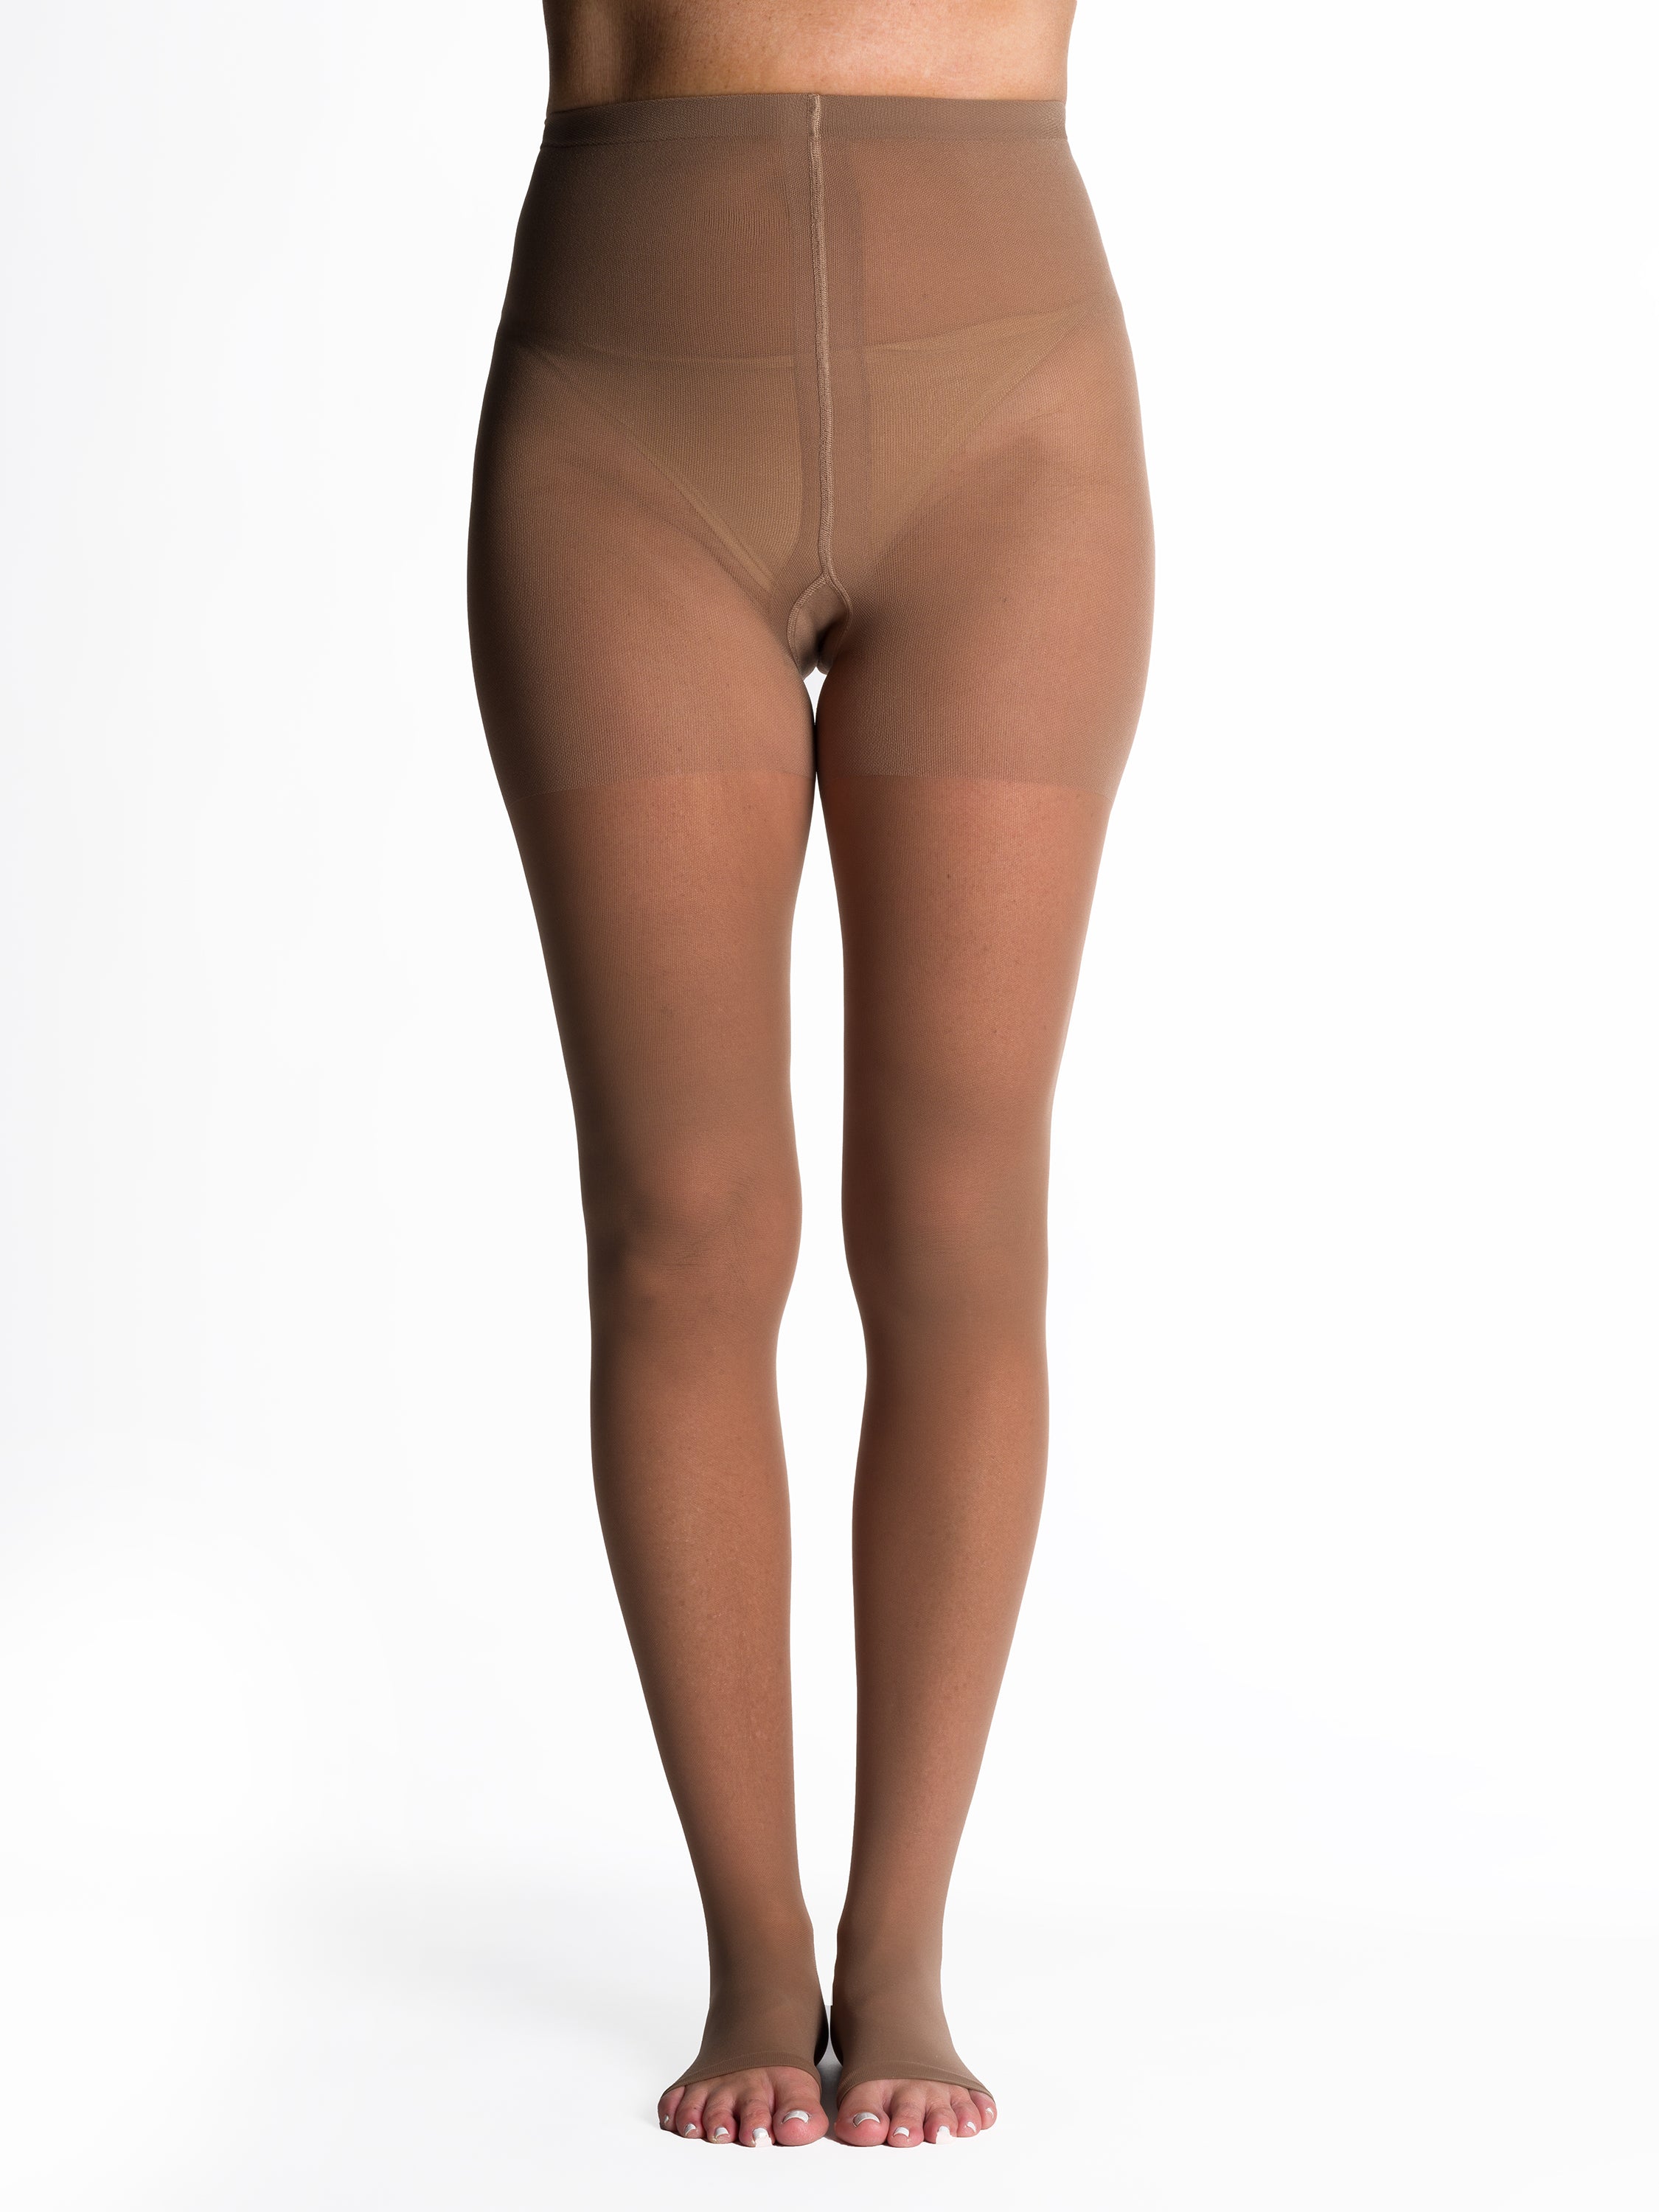 SIGVARIS Women's Style Sheer 780 Closed Toe Pantyhose 20-30mmHg - Mocha -  Small Short